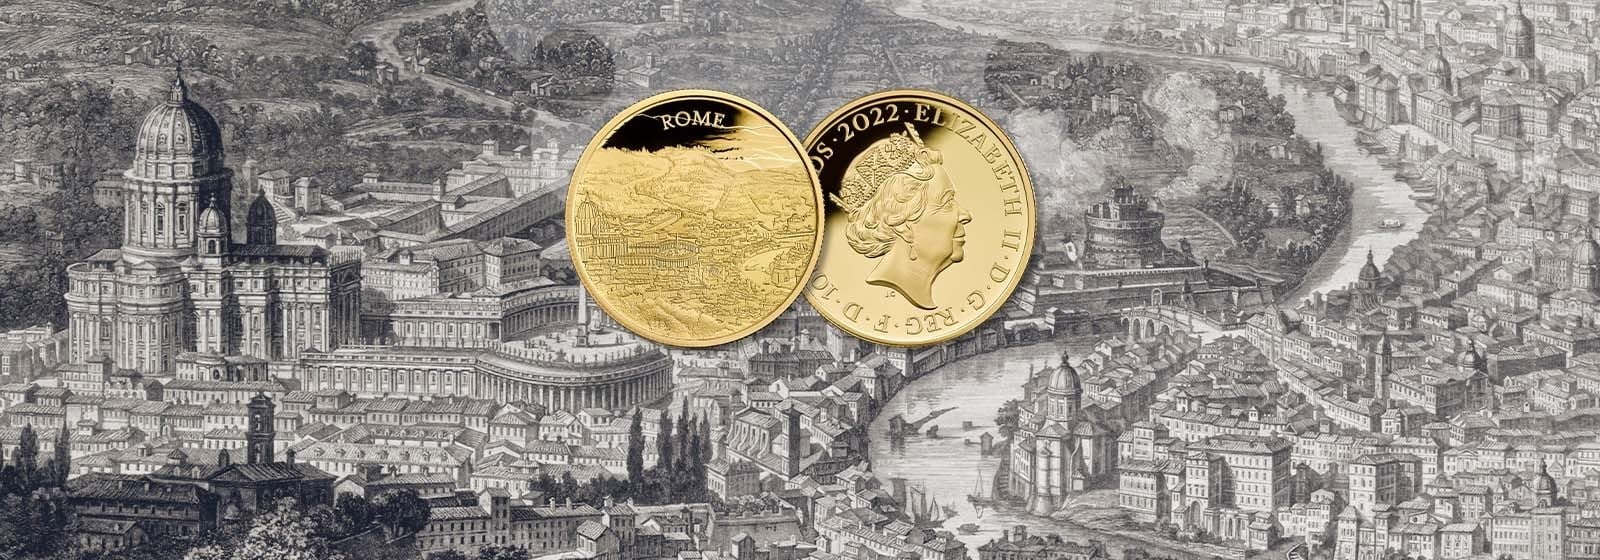 Royal Mint Rome 2022 (shop illustration) (zoom)